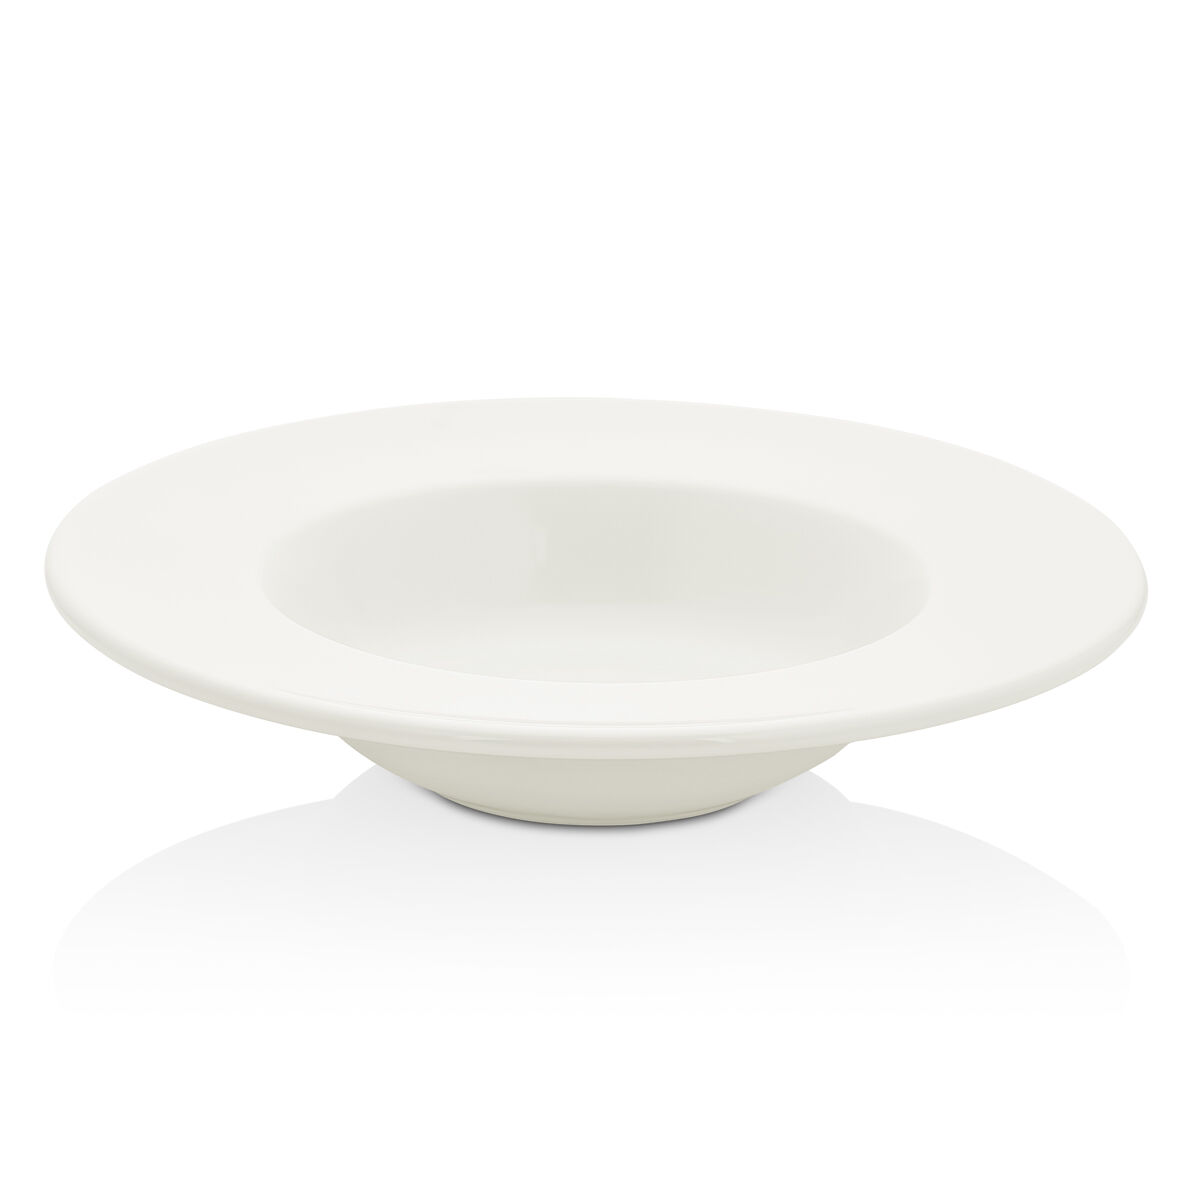 Тарелка для пасты, супа d = 28 см,480 мл, фарфор, серия "Arel", By Bone